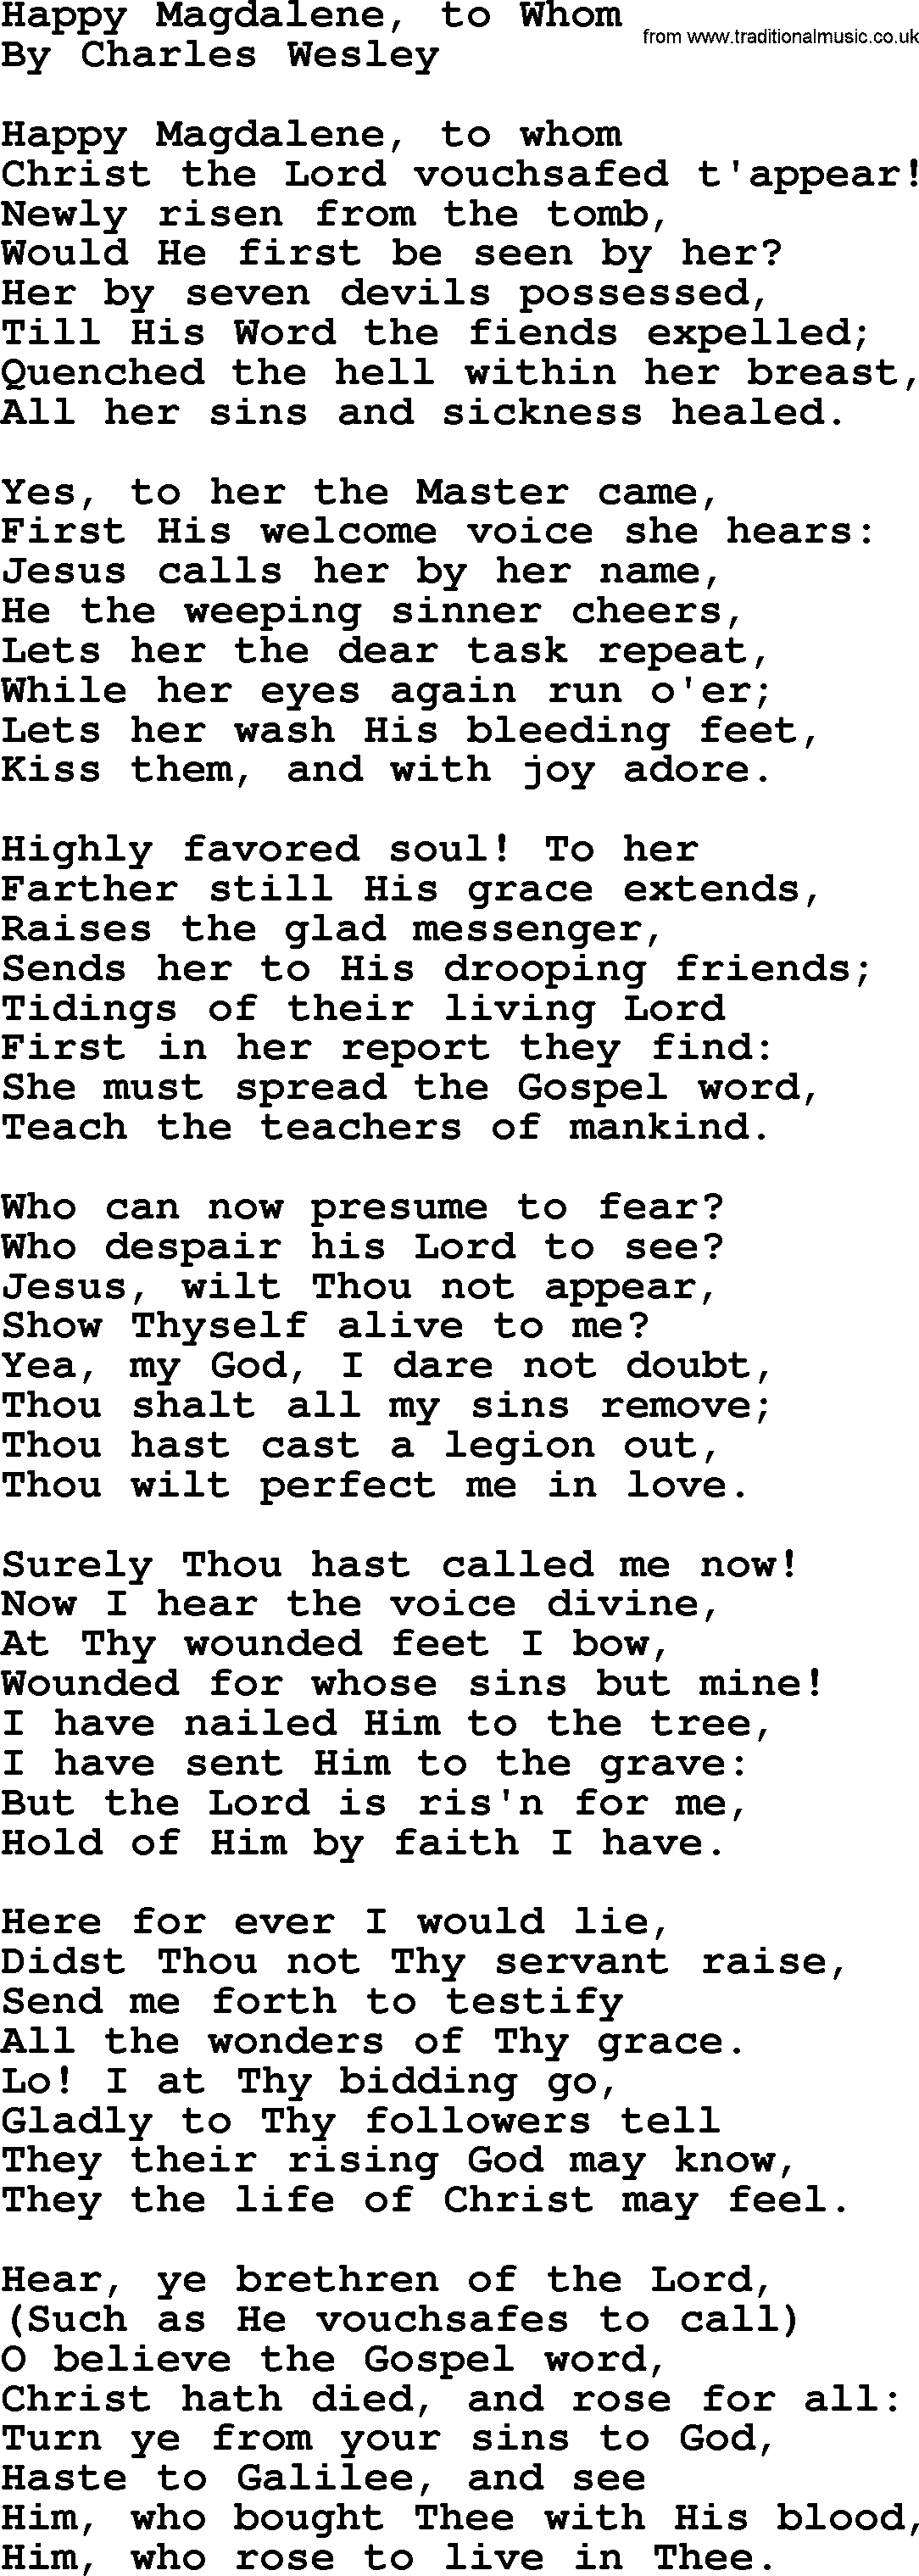 Charles Wesley hymn: Happy Magdalene, to Whom, lyrics